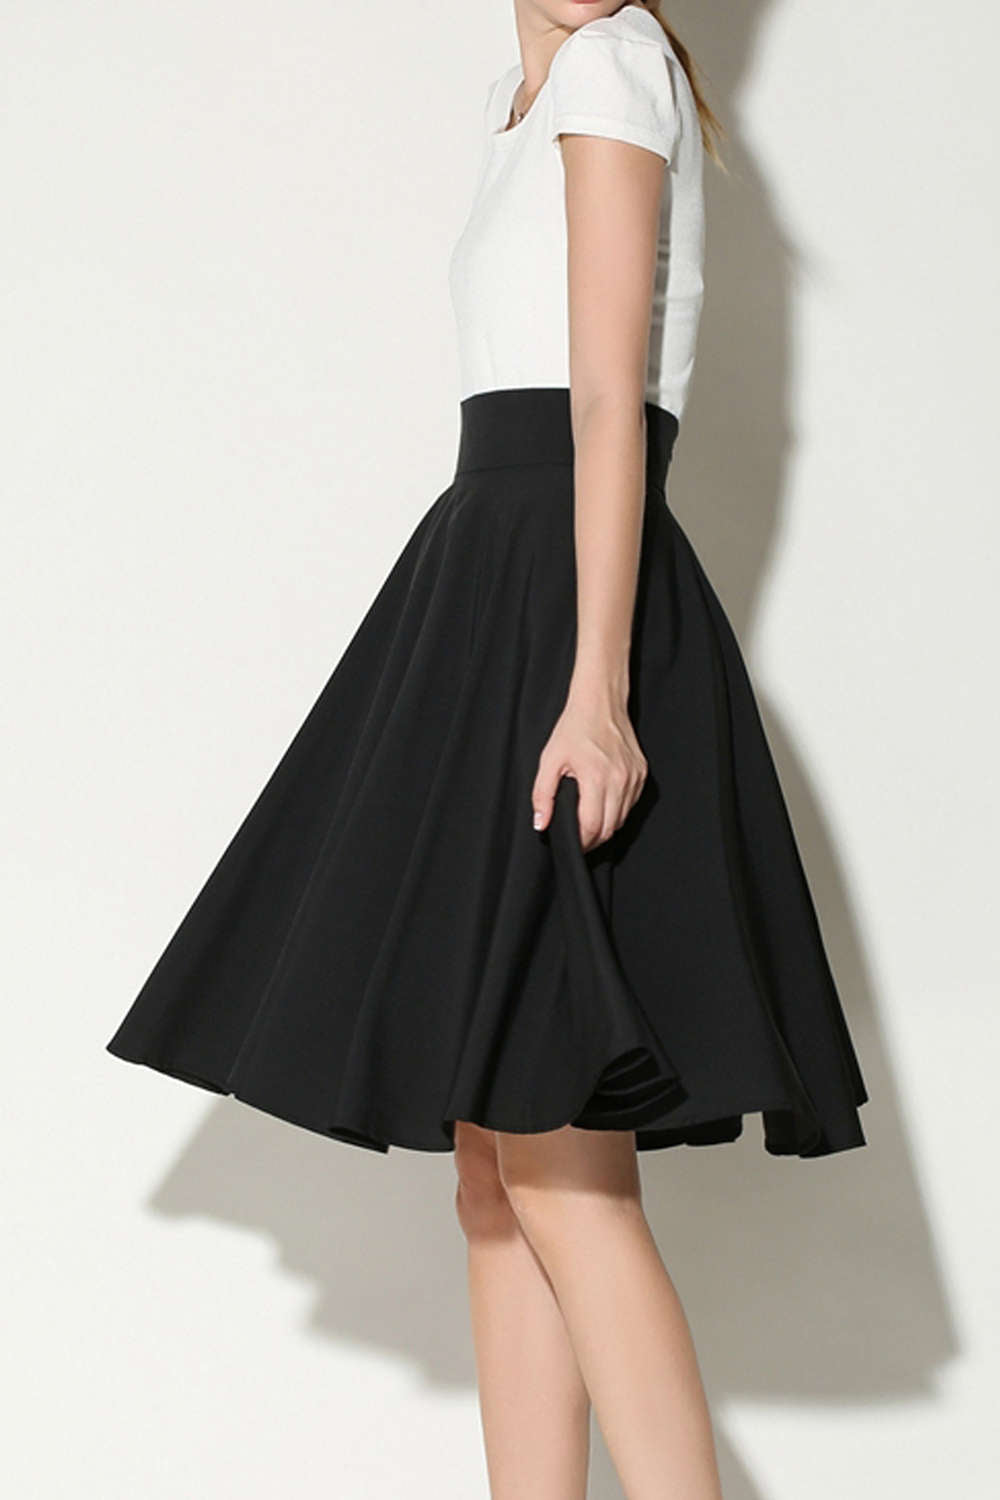 Iyasson High Waist A Line Skirt 